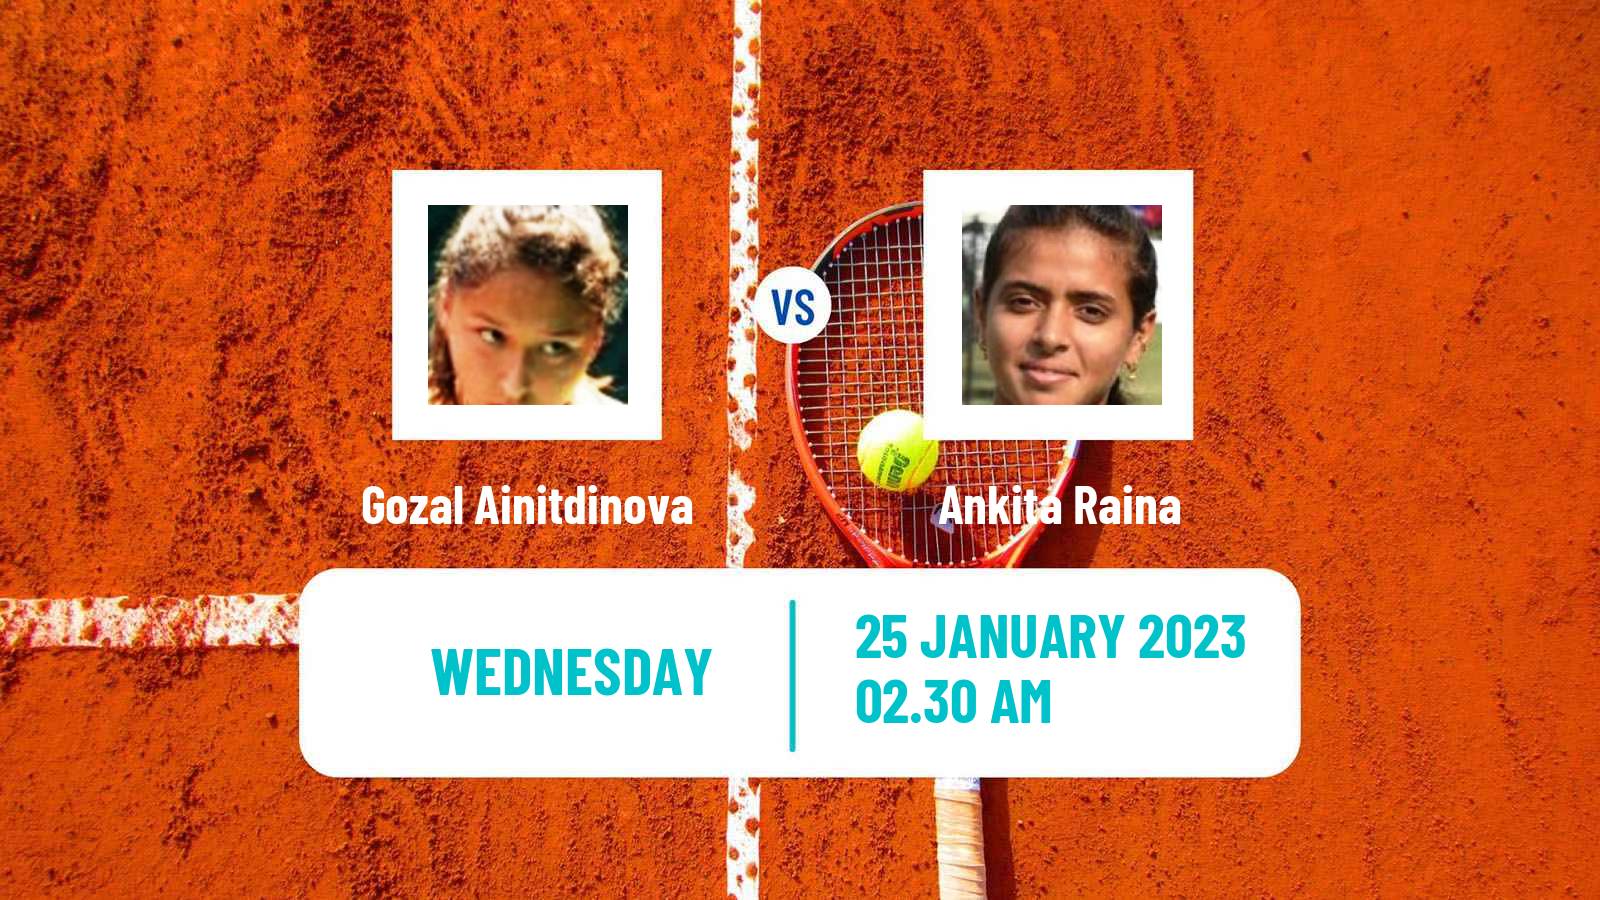 Tennis ITF Tournaments Gozal Ainitdinova - Ankita Raina